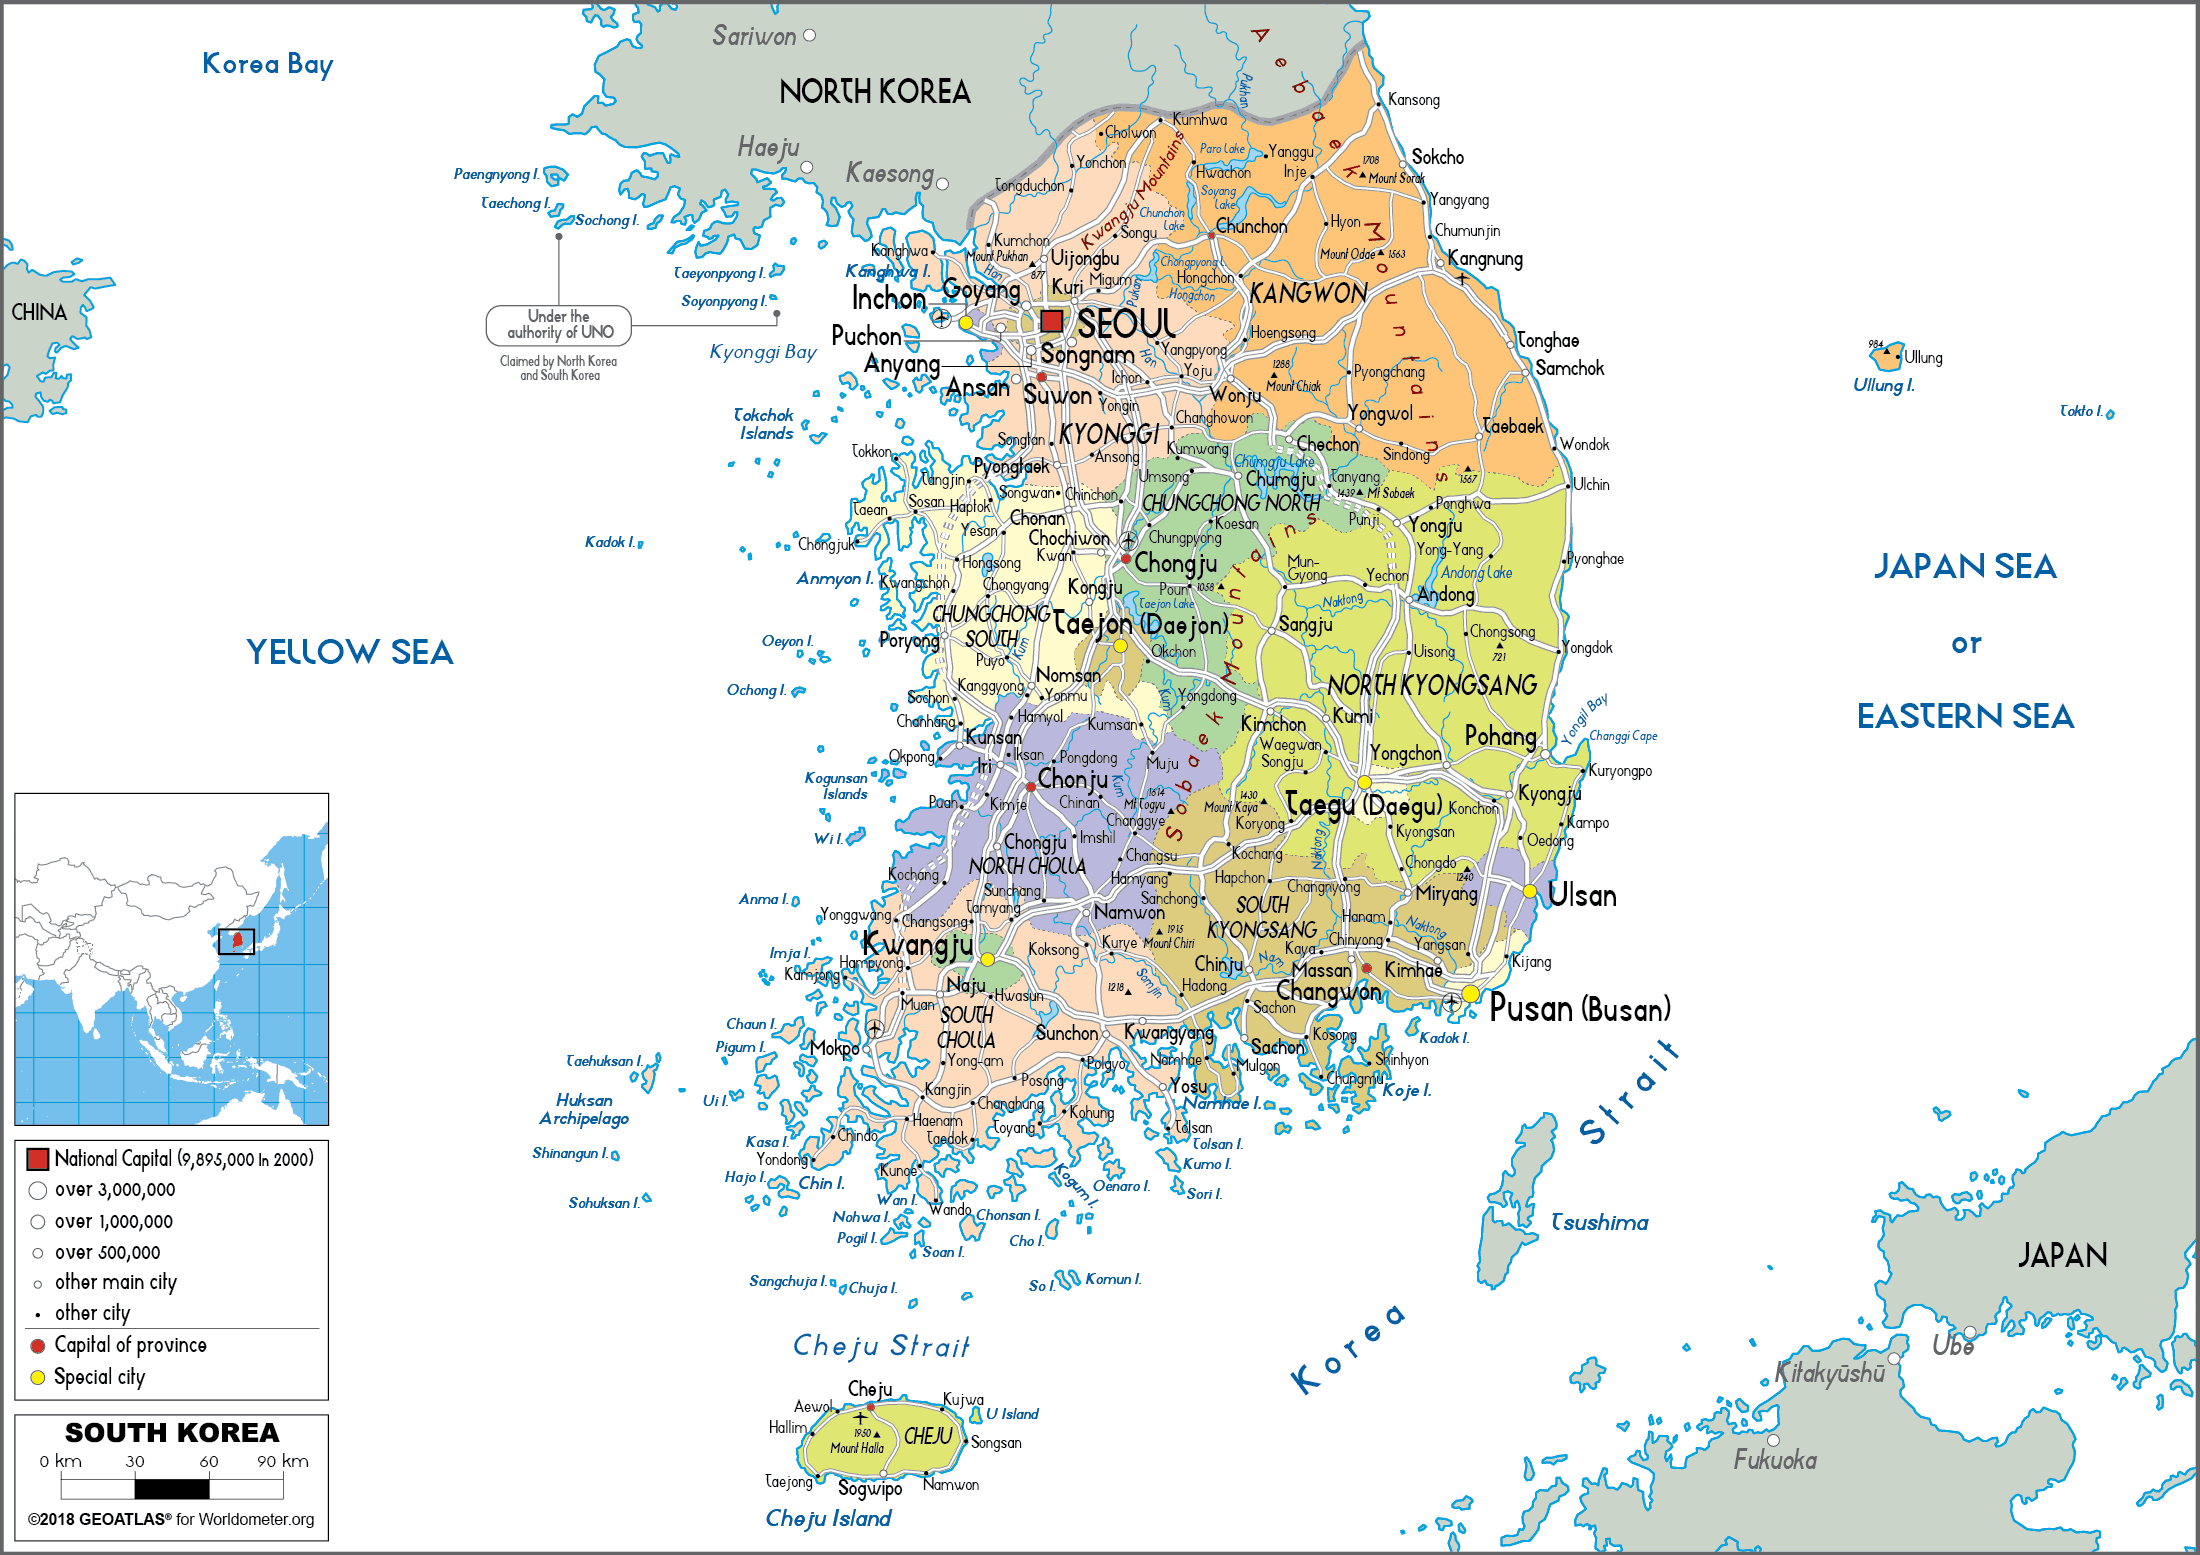 South Korea Political Map South Korea Map (Political) Worldometer.